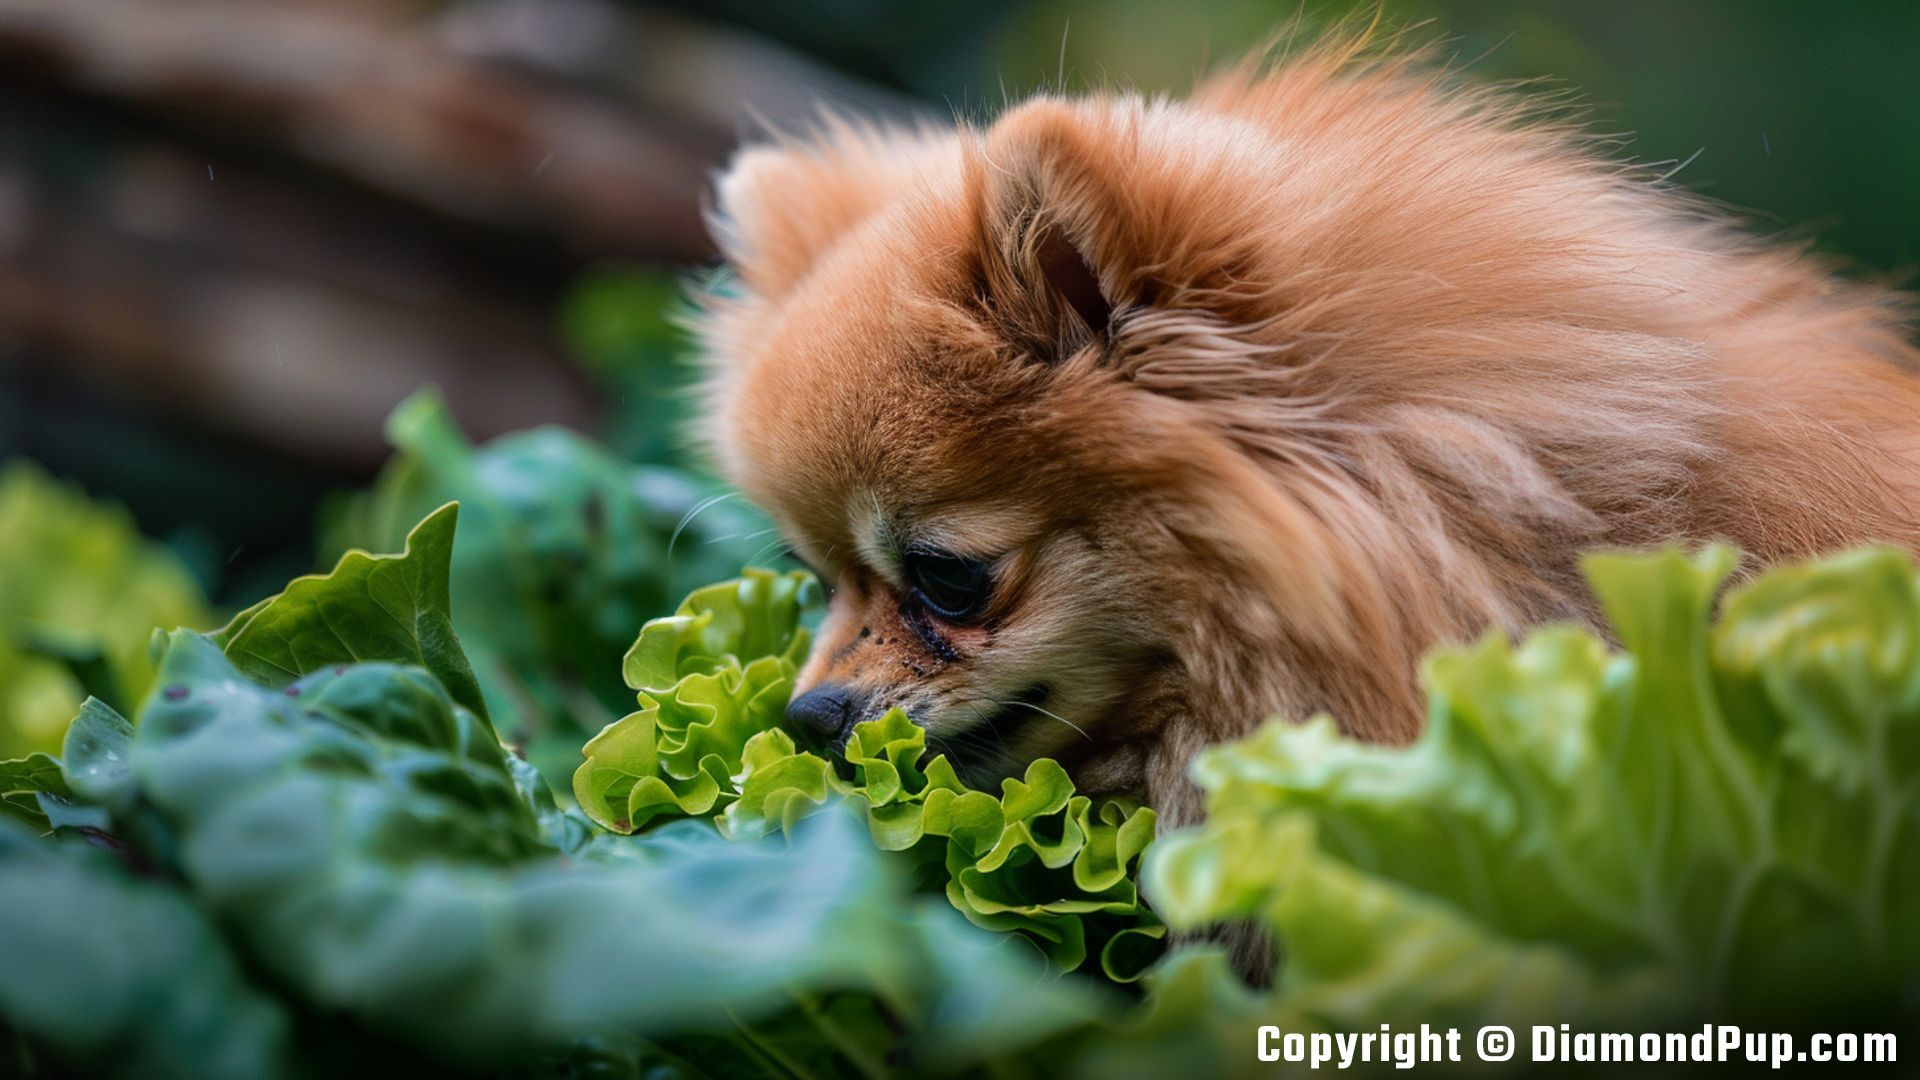 Photograph of a Cute Pomeranian Eating Lettuce